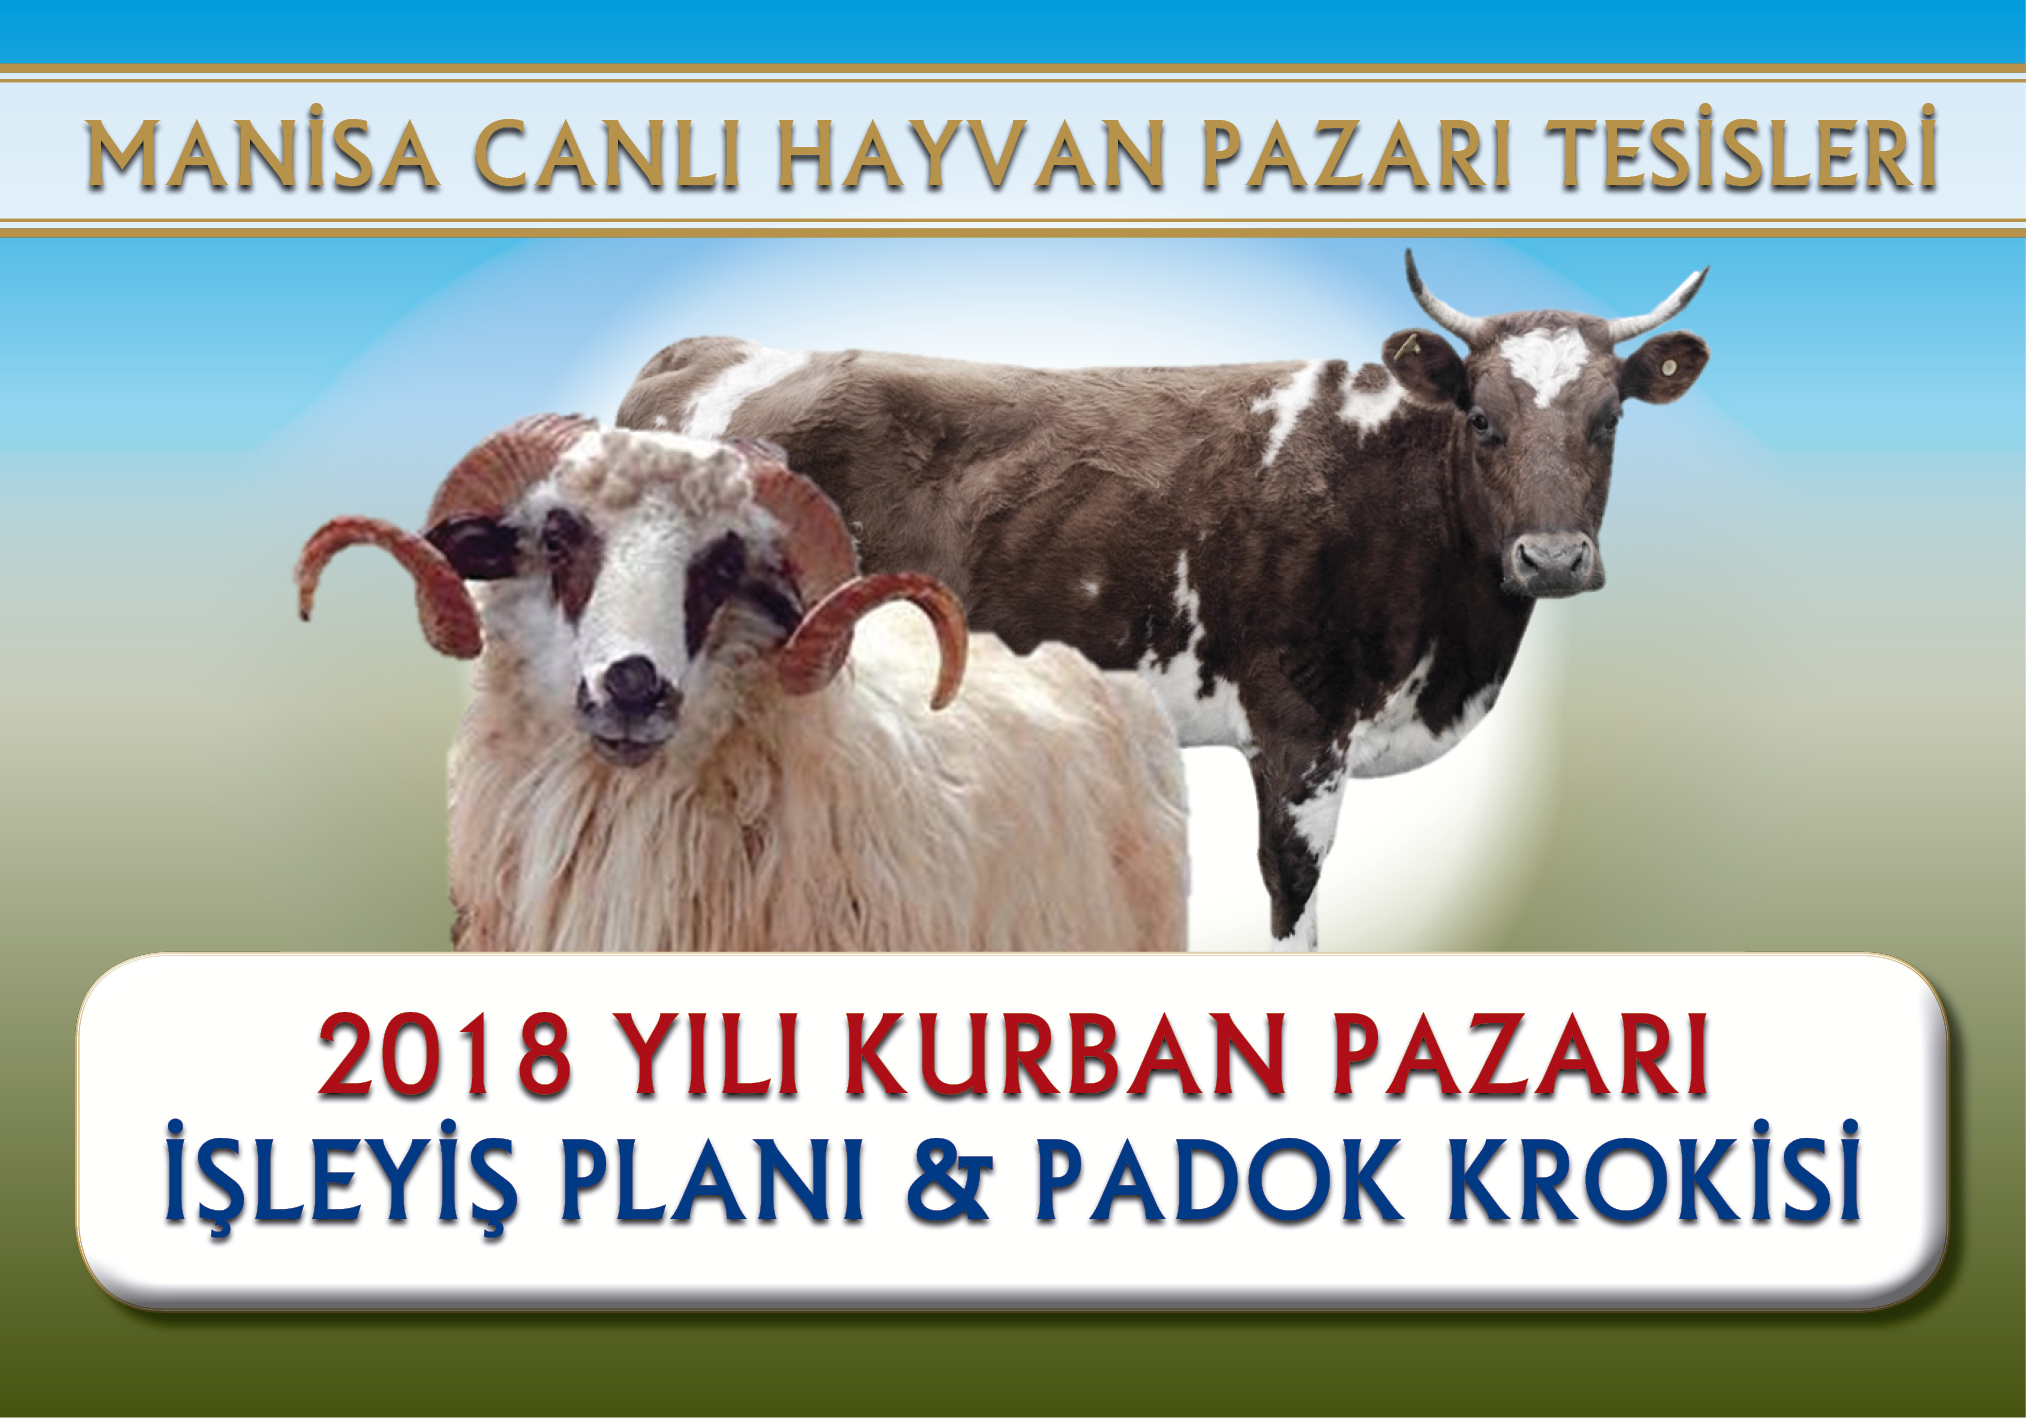 2018 YILI KURBAN PAZARI LEY PLANI & PADOK KROKS